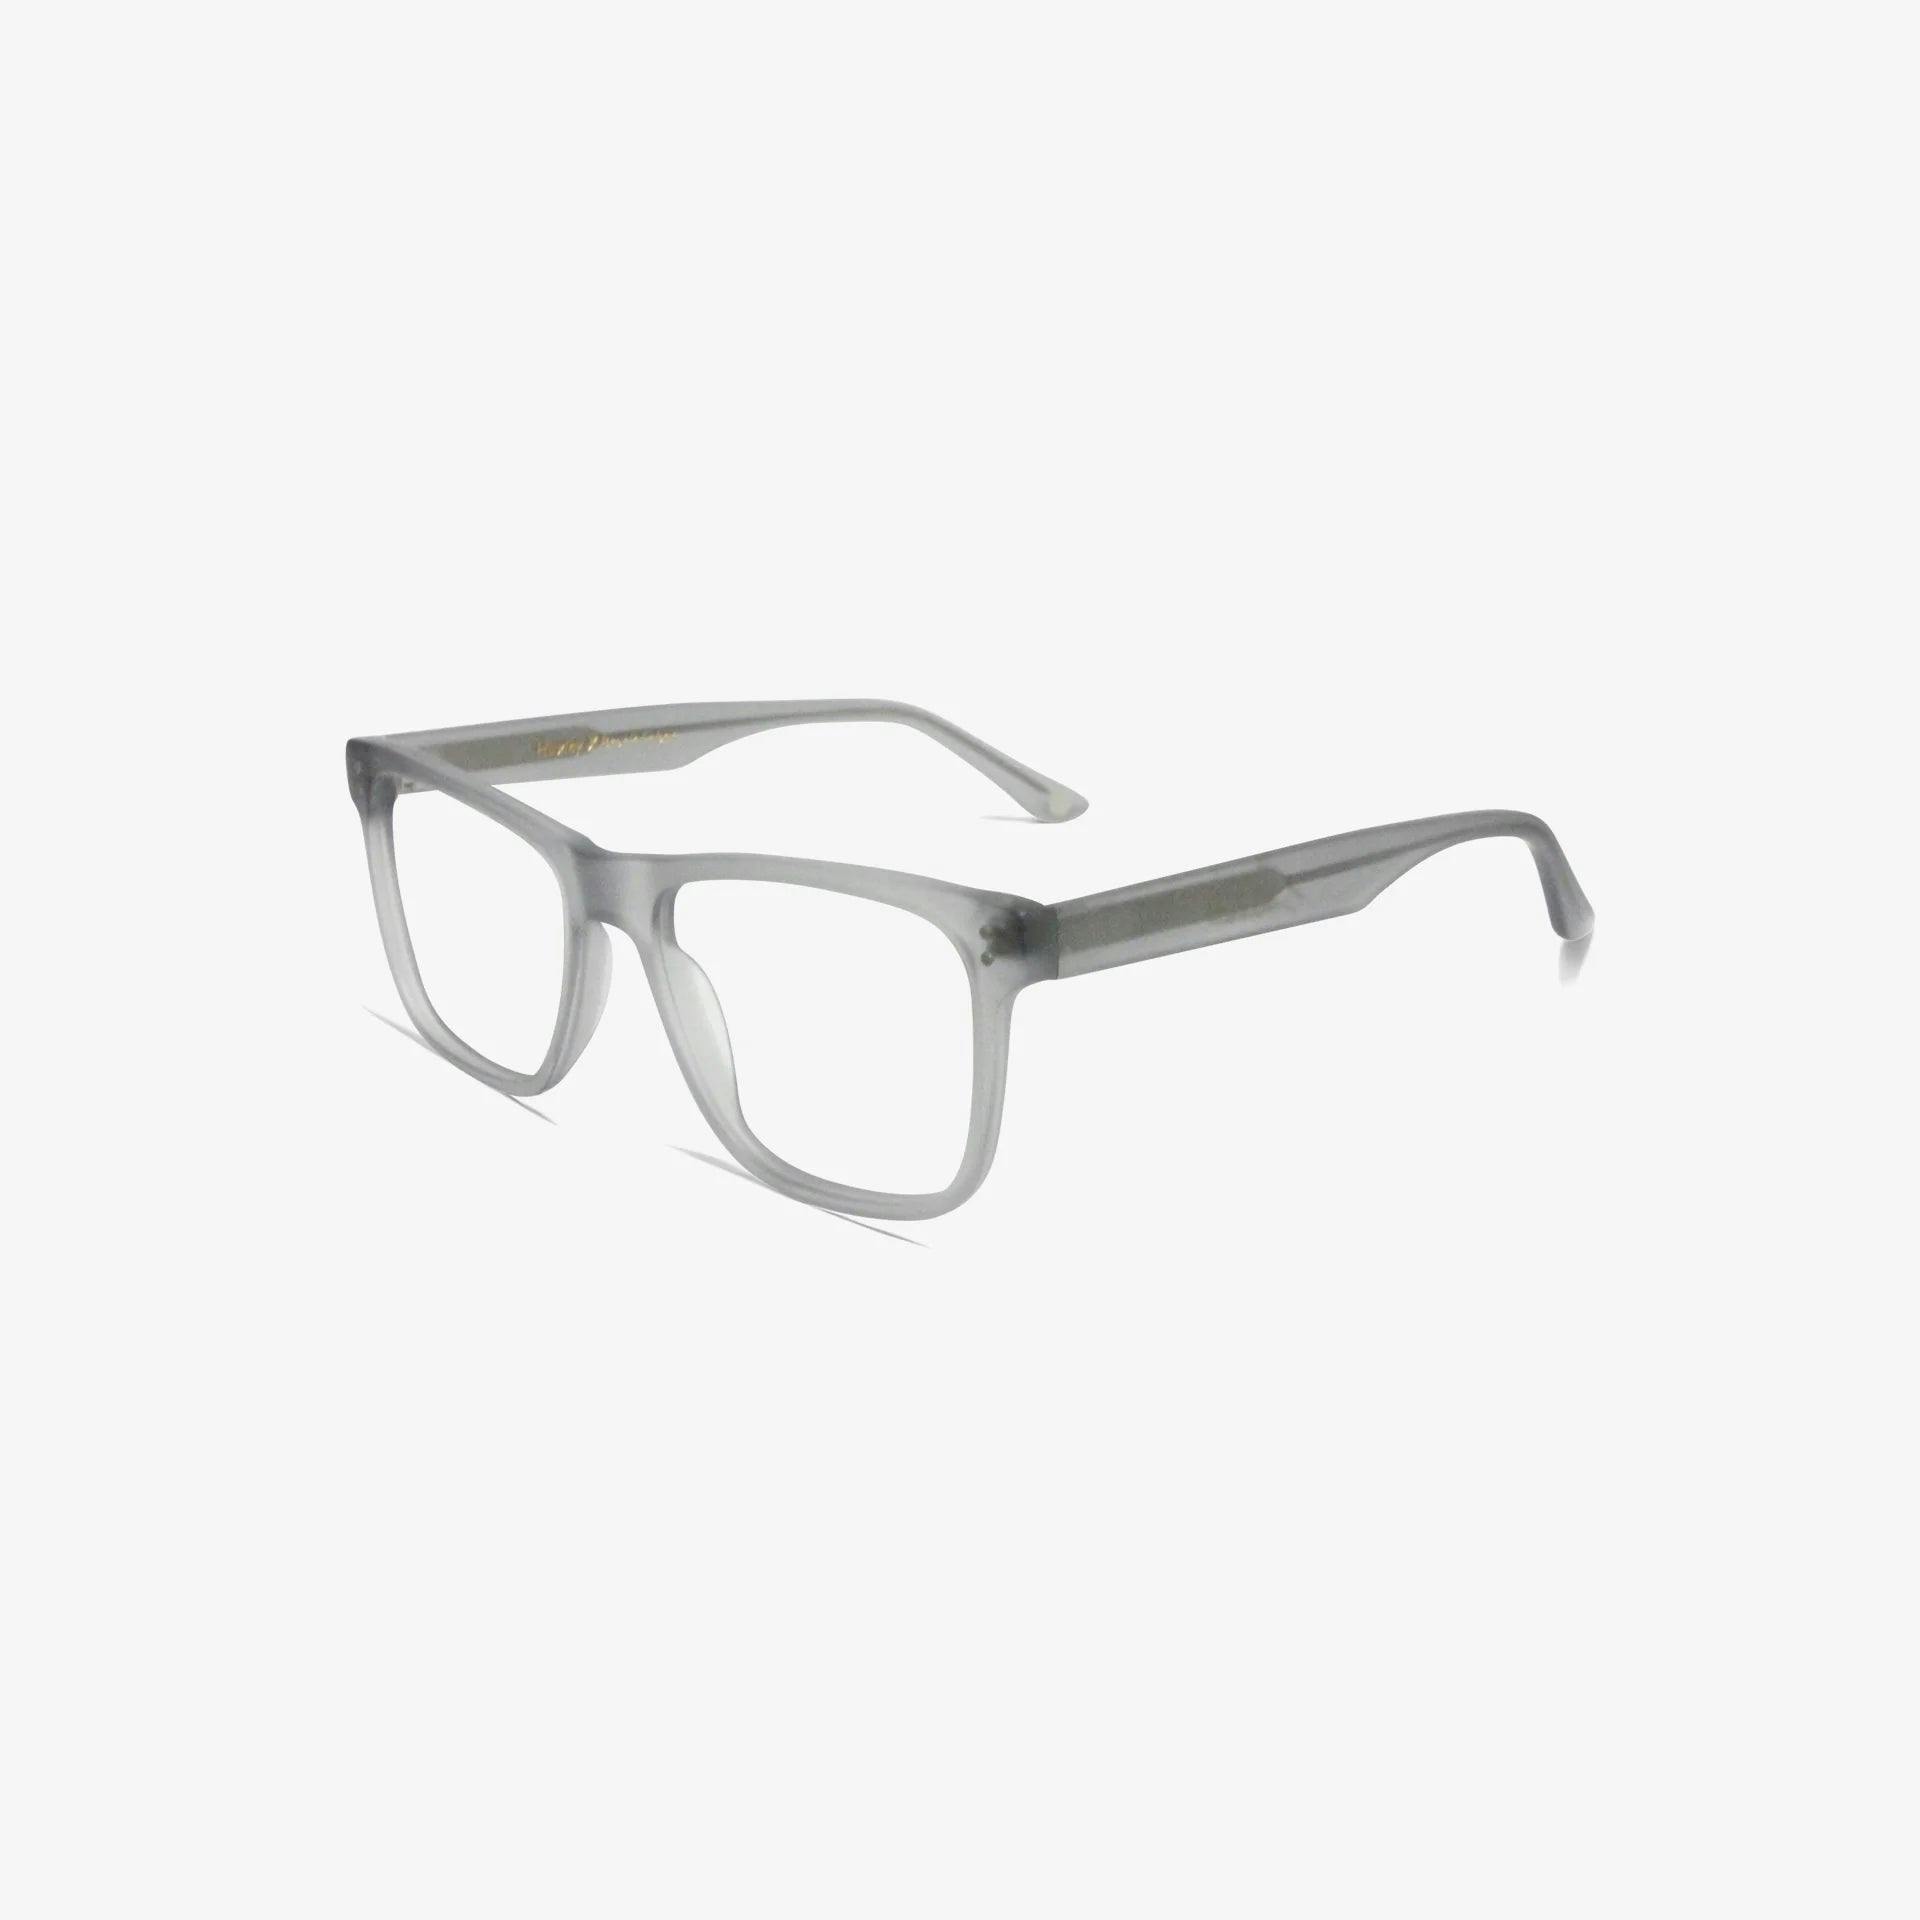 Huxley glasses | Fabes Slate Matte 